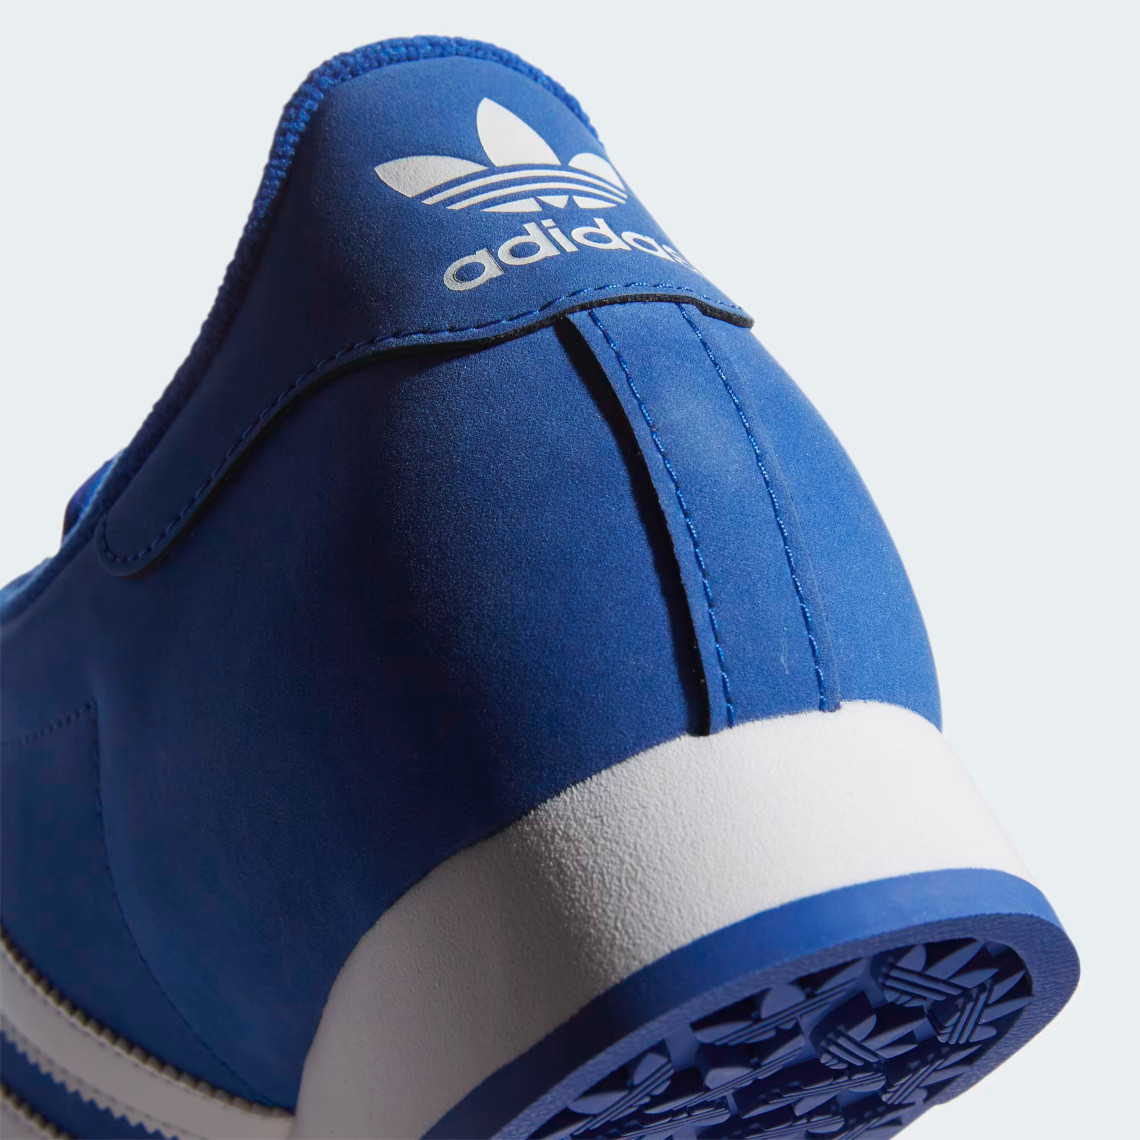 Adidas Samoa Royal Blue Fv4985 8